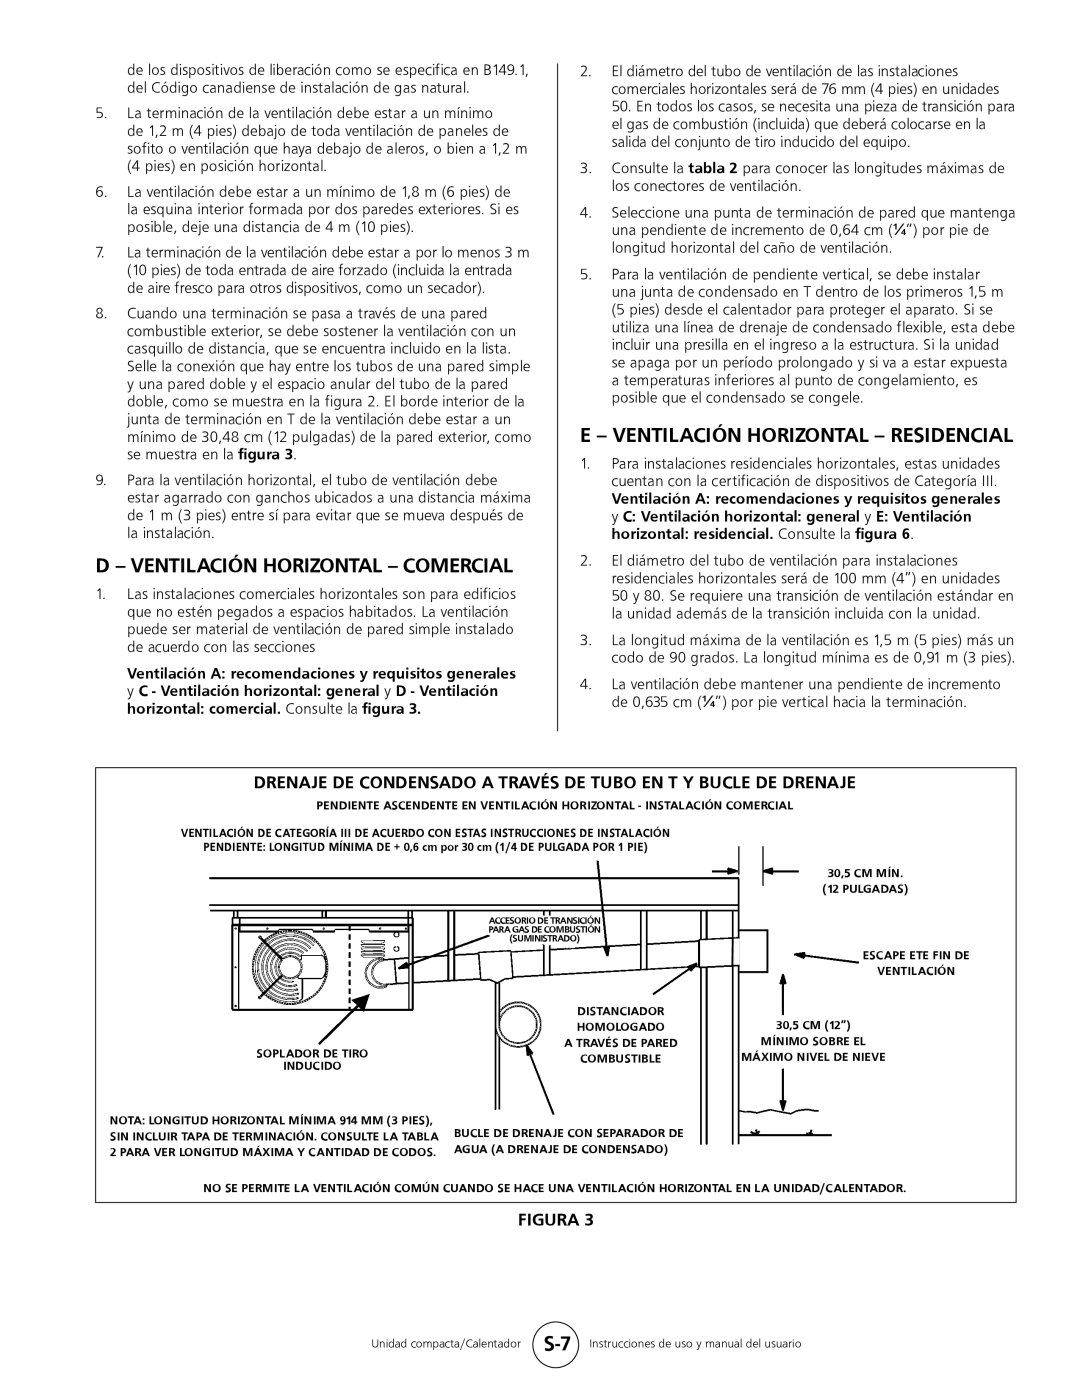 Mr. Heater MHU 80, MHU 50 D - Ventilación Horizontal - Comercial, E - Ventilación Horizontal - Residencial, Figura 